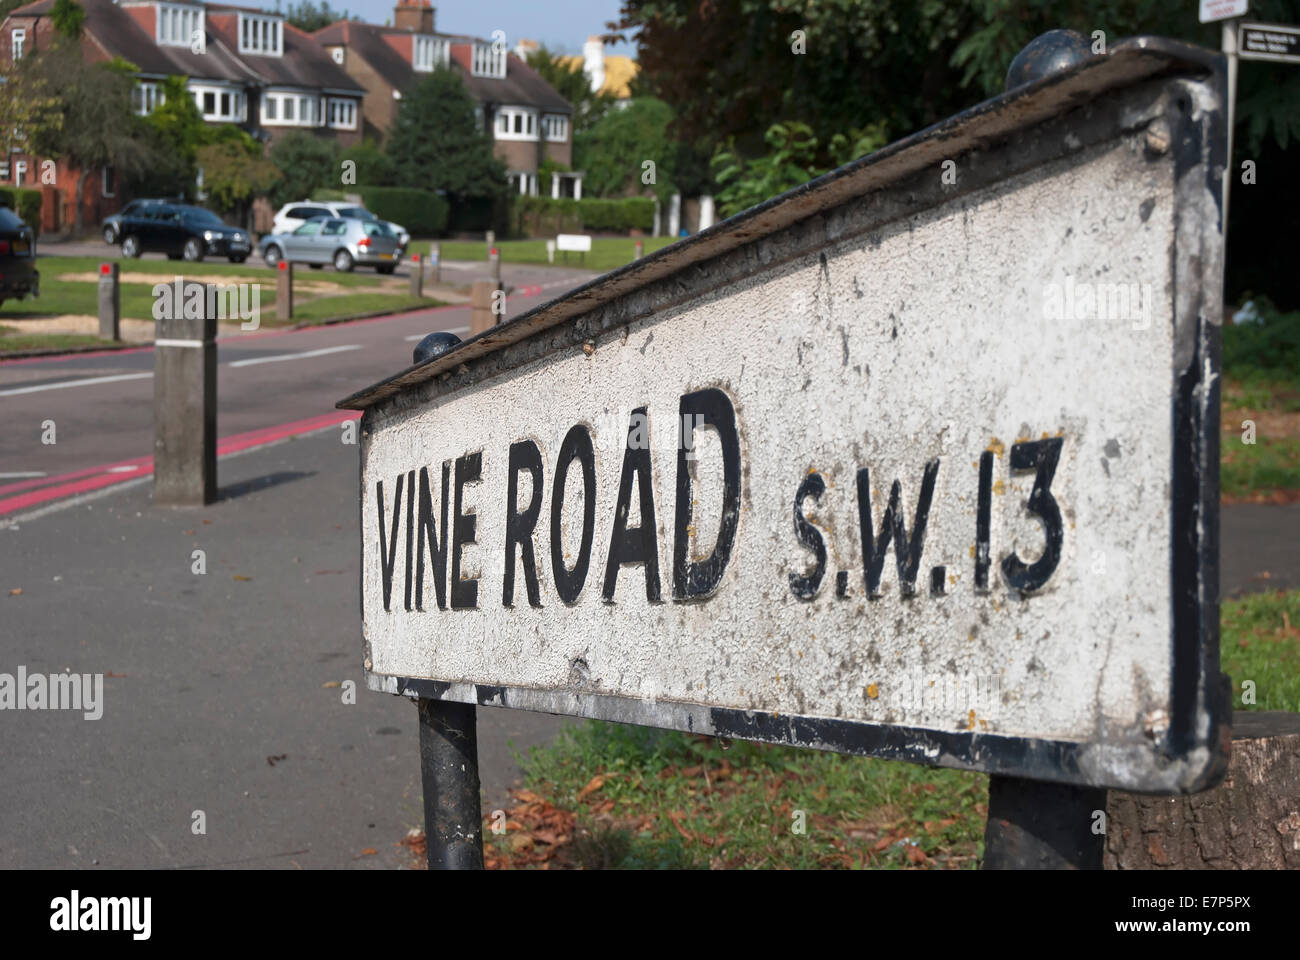 street name sign for vine road, barnes, southwest london, england Stock Photo